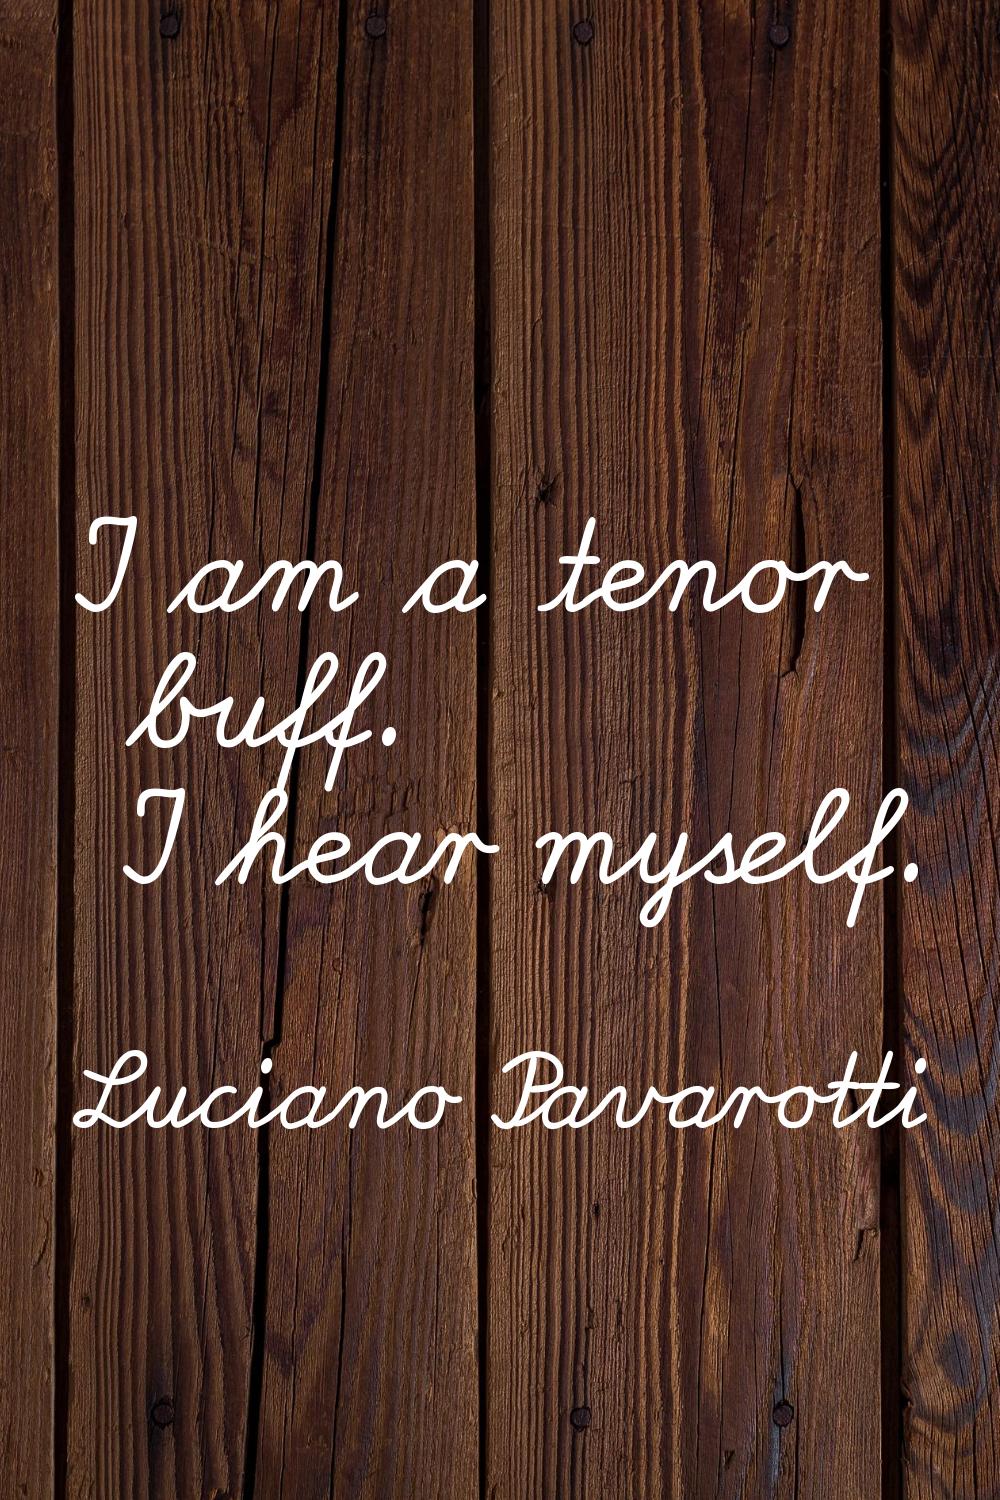 I am a tenor buff. I hear myself.